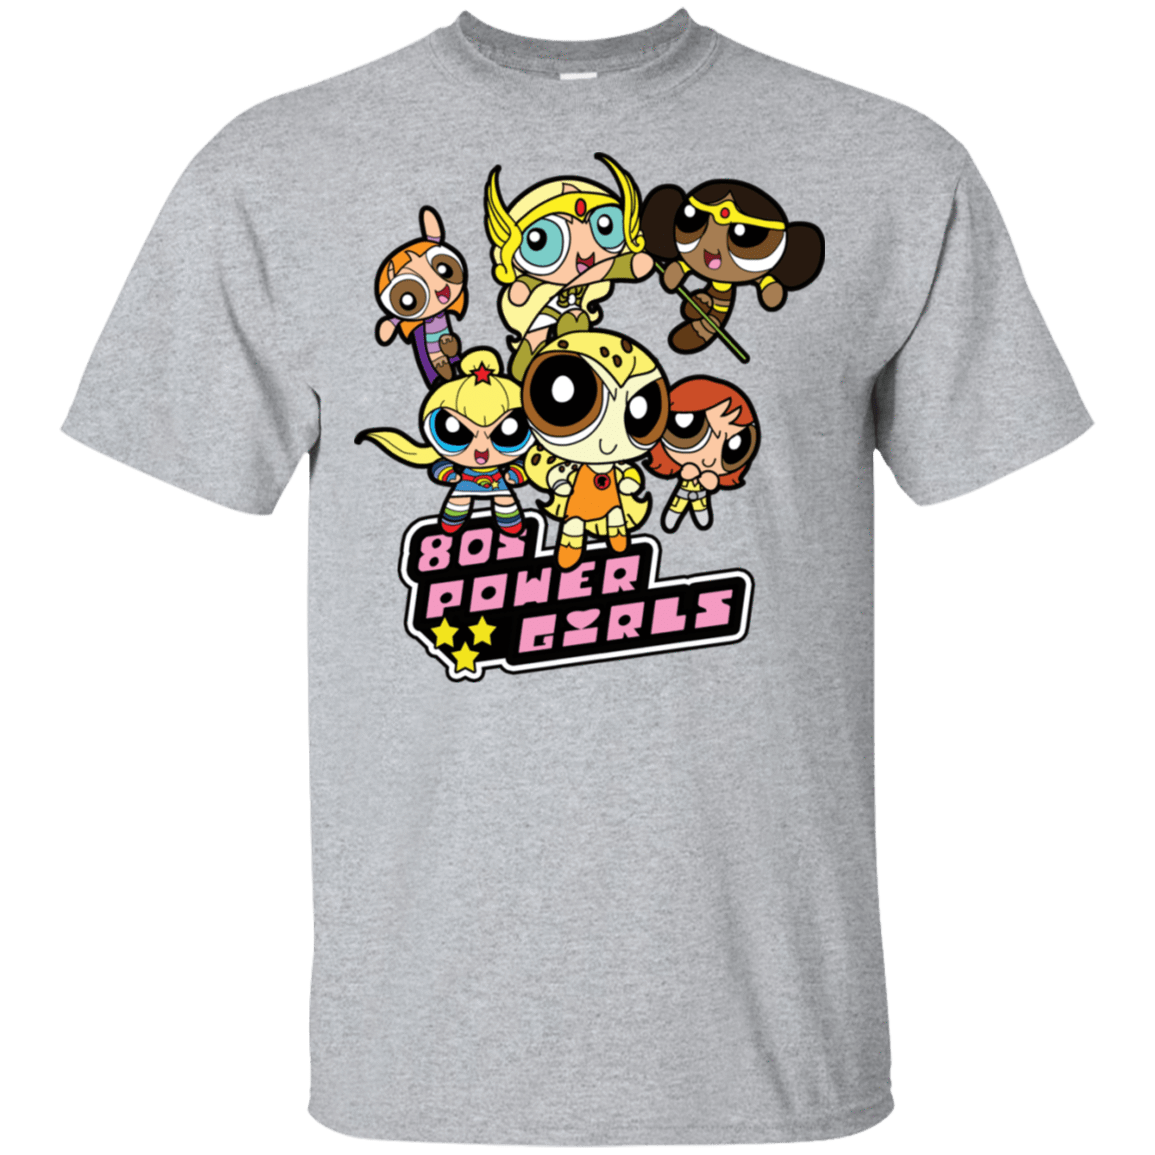 T-Shirts Sport Grey / S 80s Power Girls T-Shirt